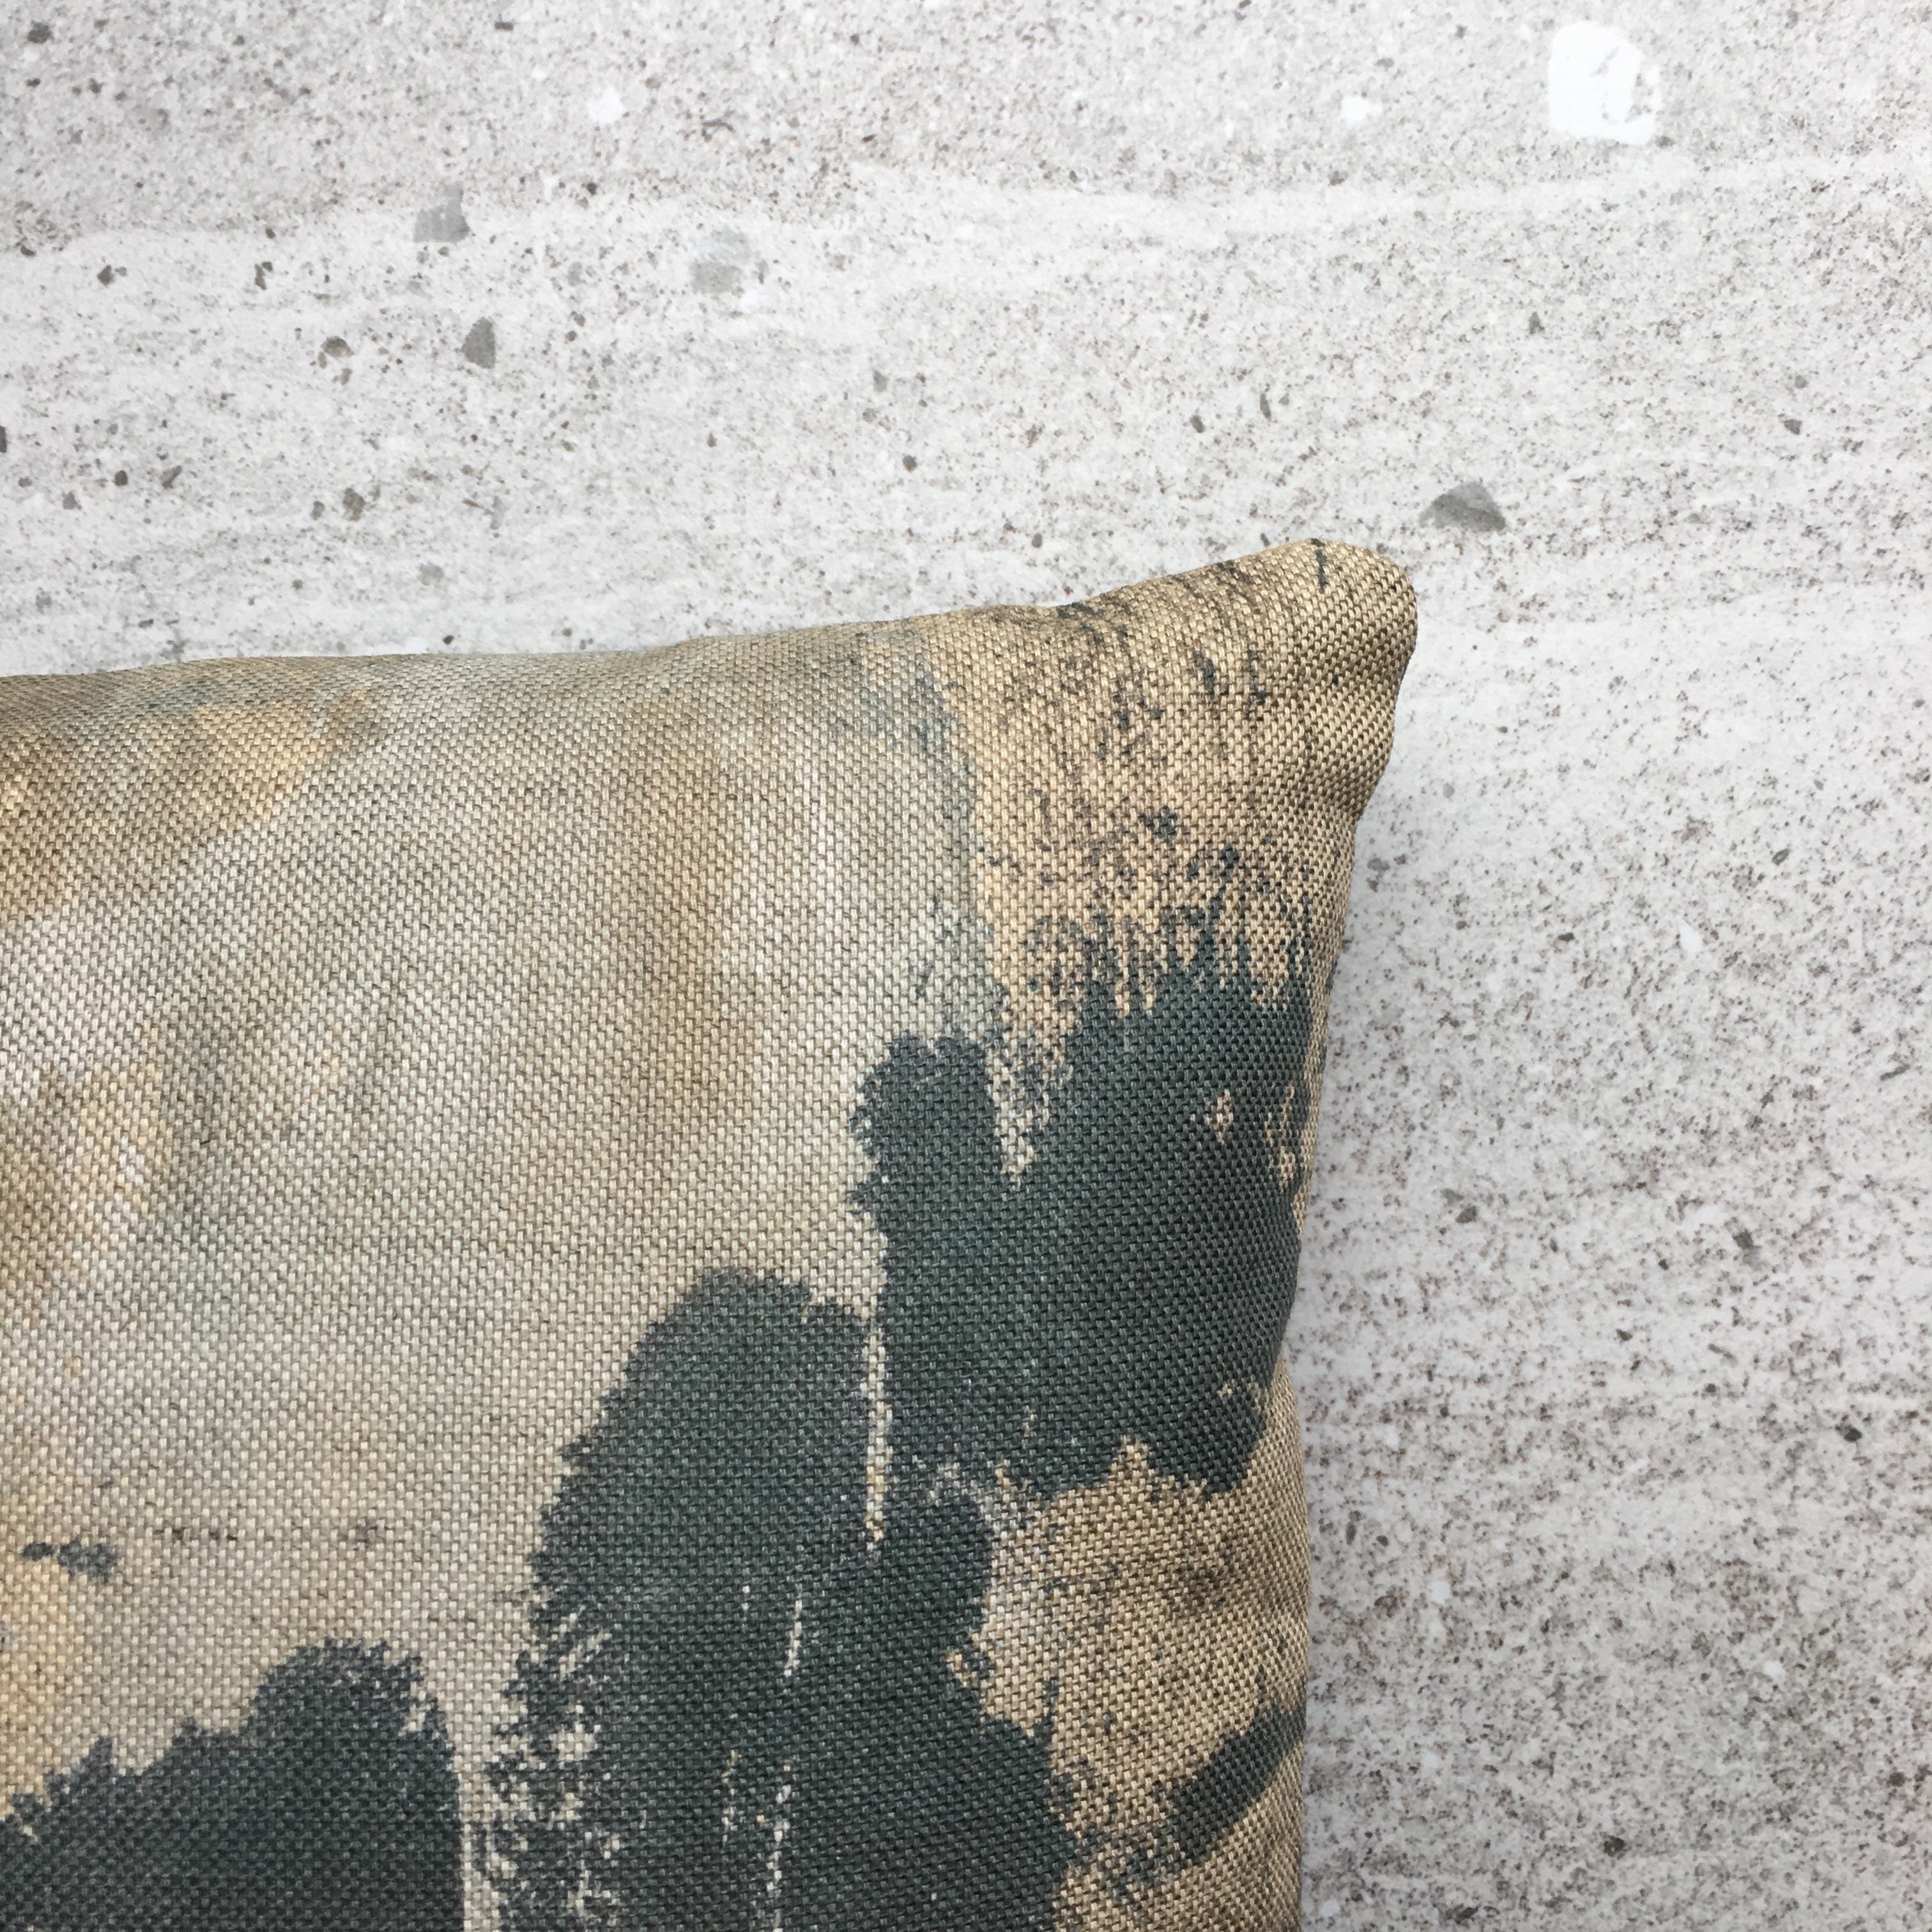 Abstract No 2 Linen Mini Cushion